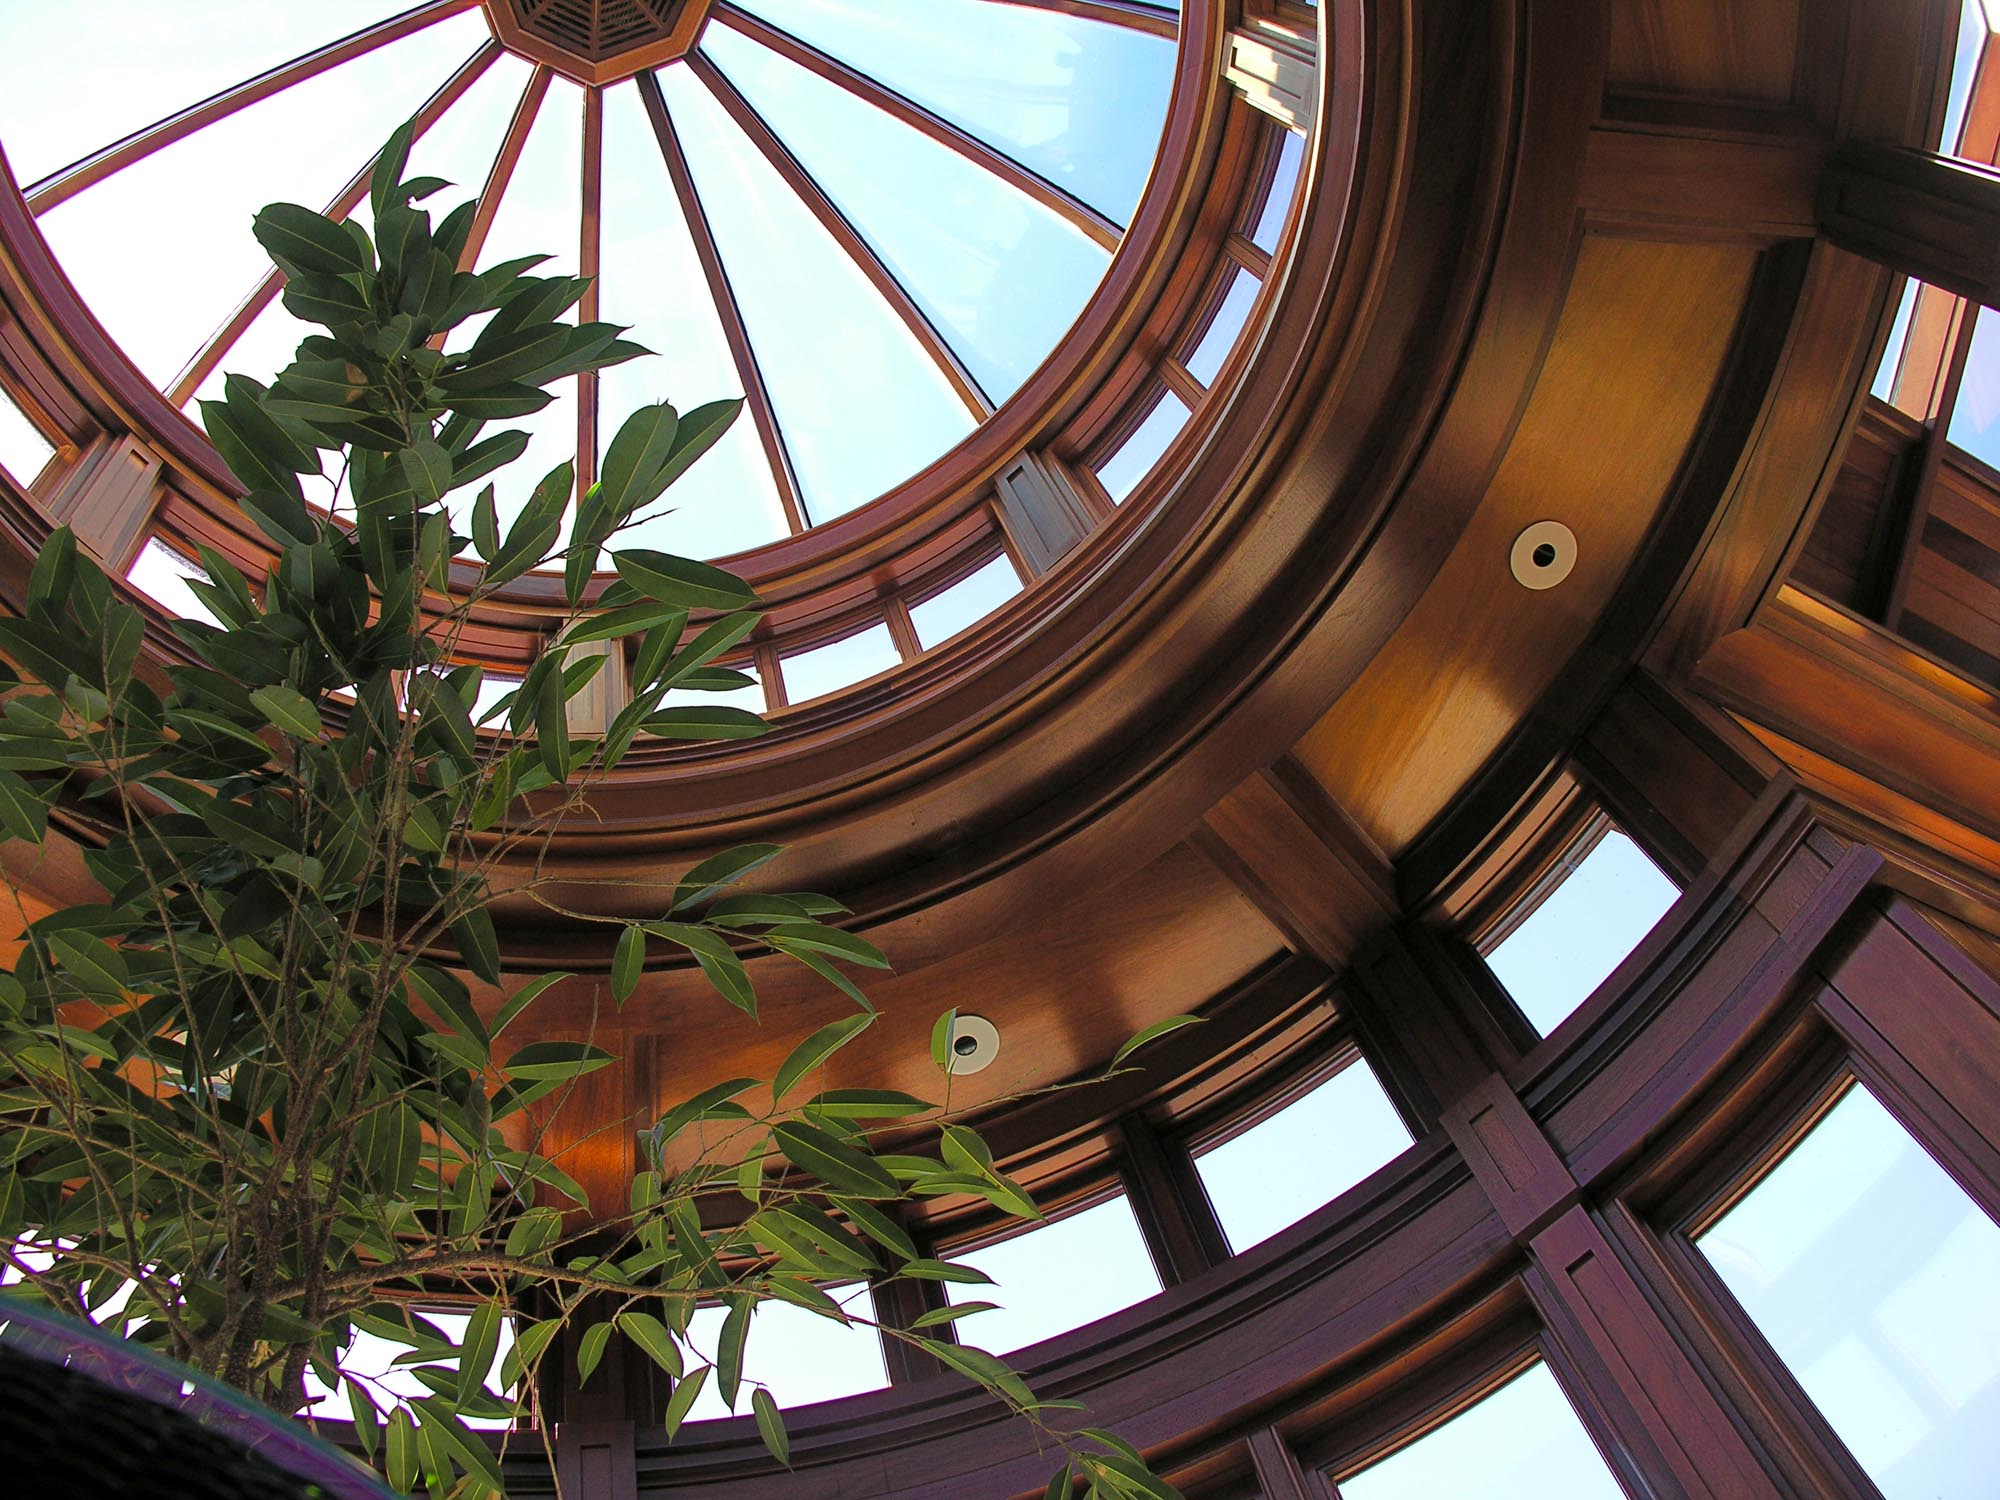 custom glass dome conservatory | dome interior view